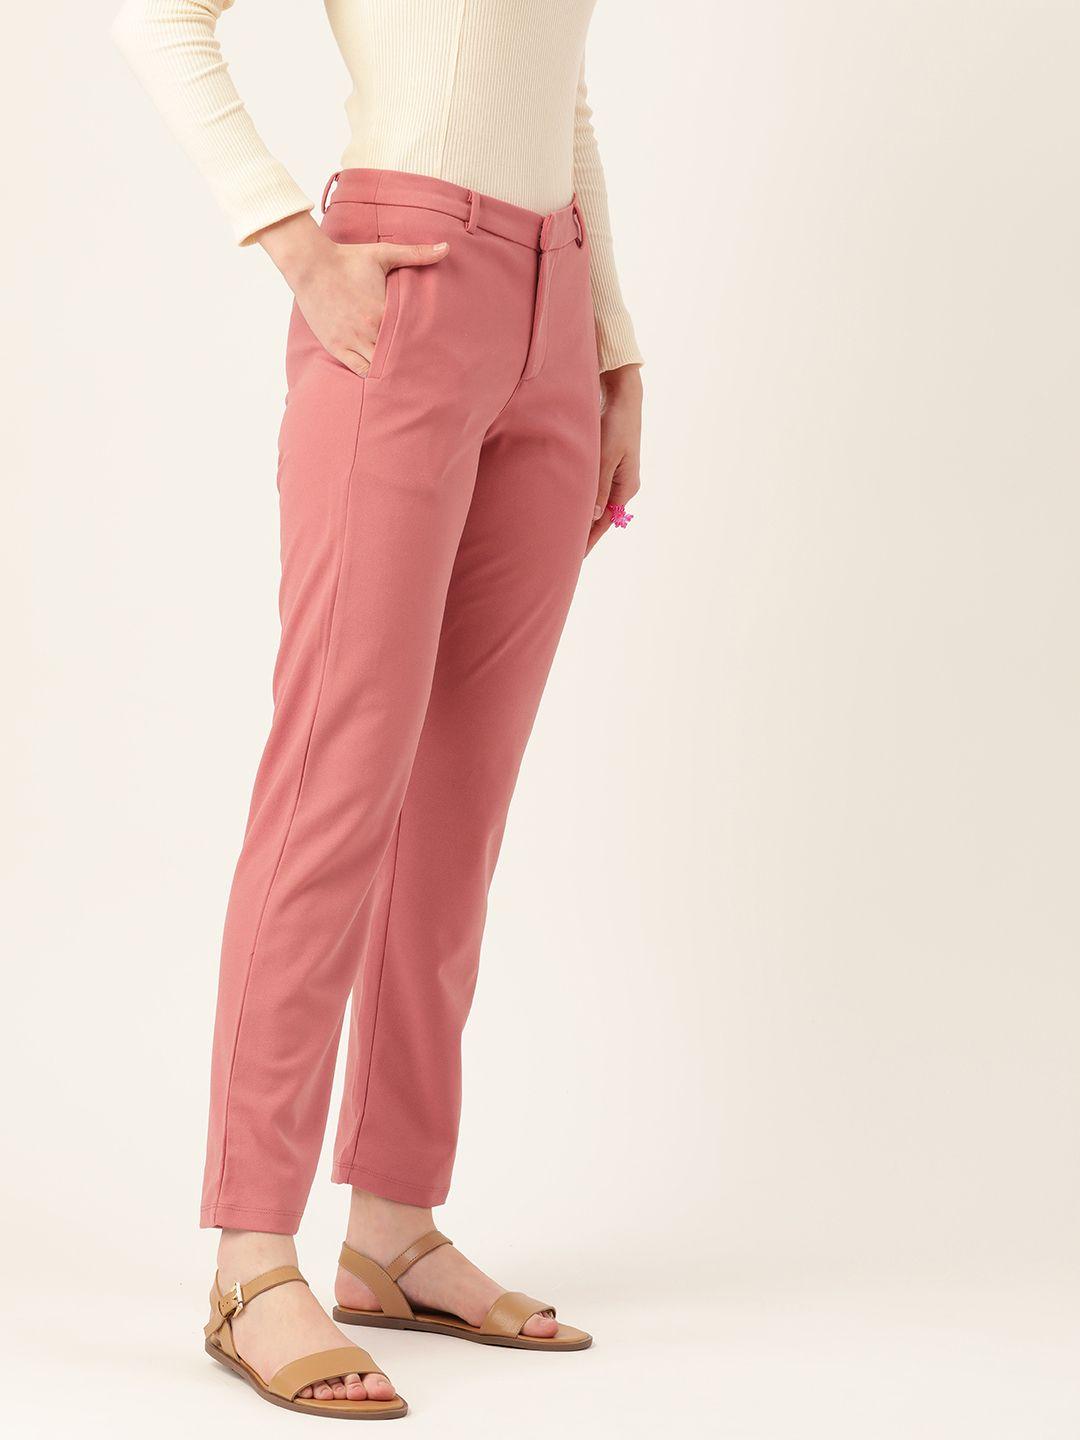 dressberry-women-pink-low-rise-trousers